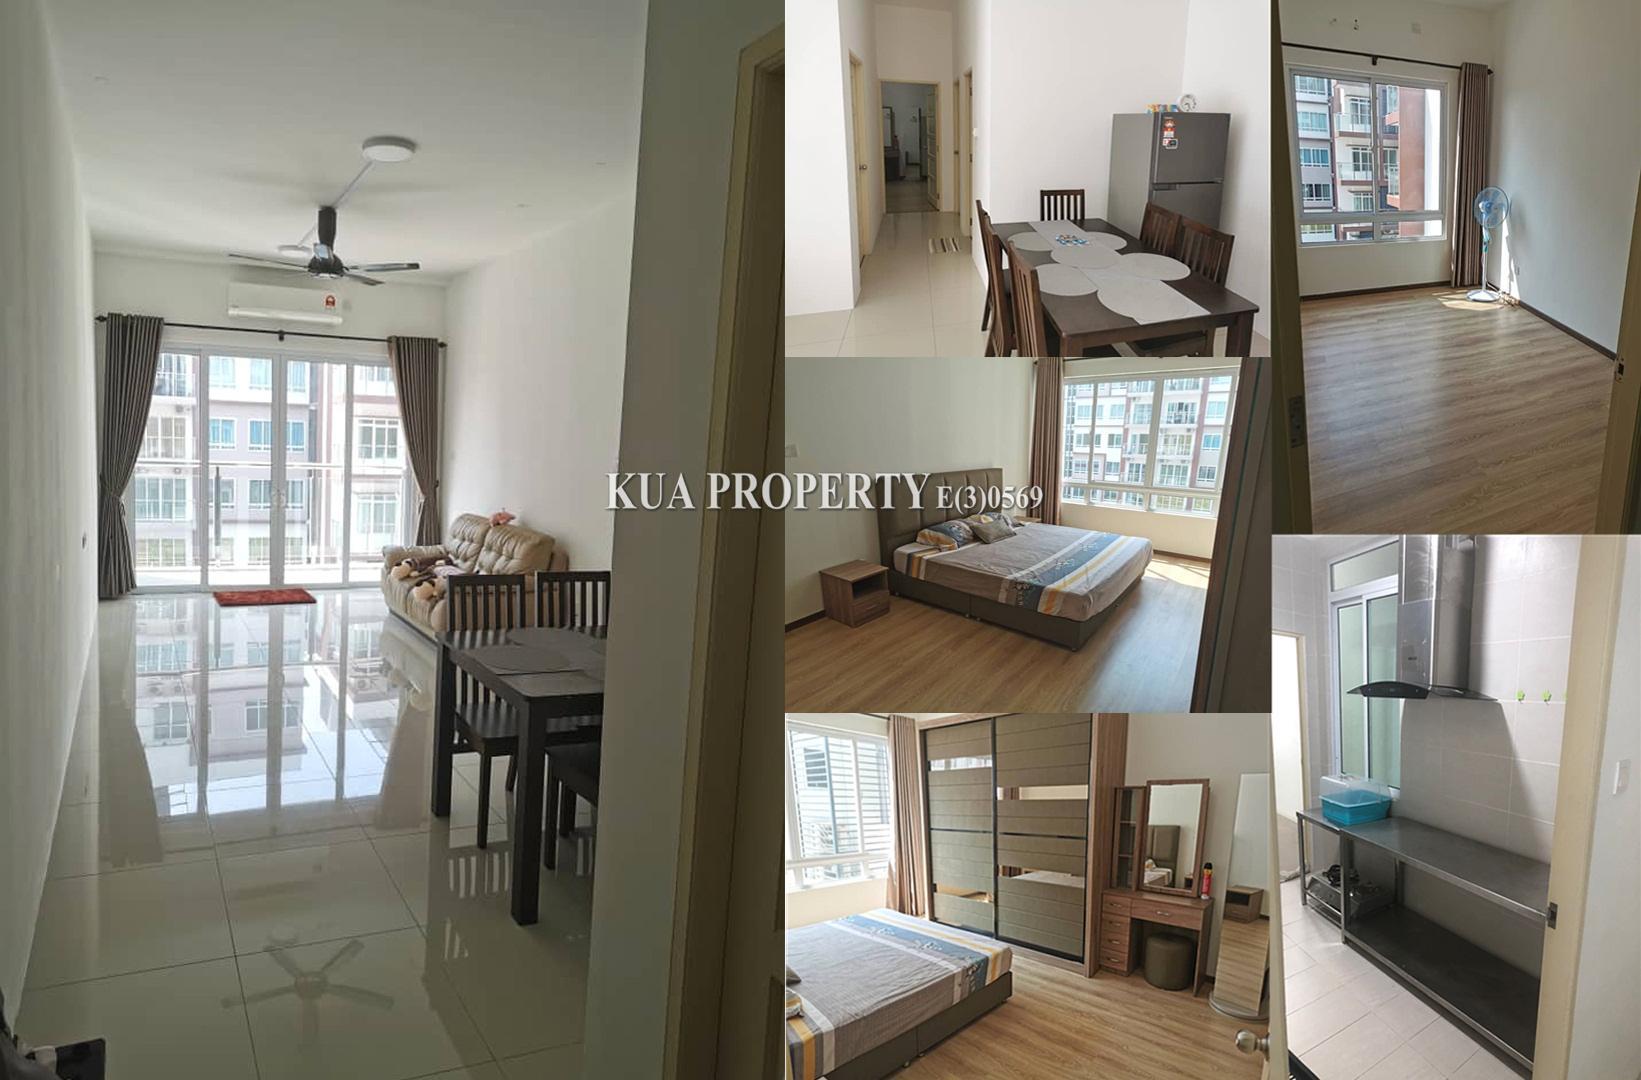 Level 5 P’residence Condominium For Sale & For Rent!